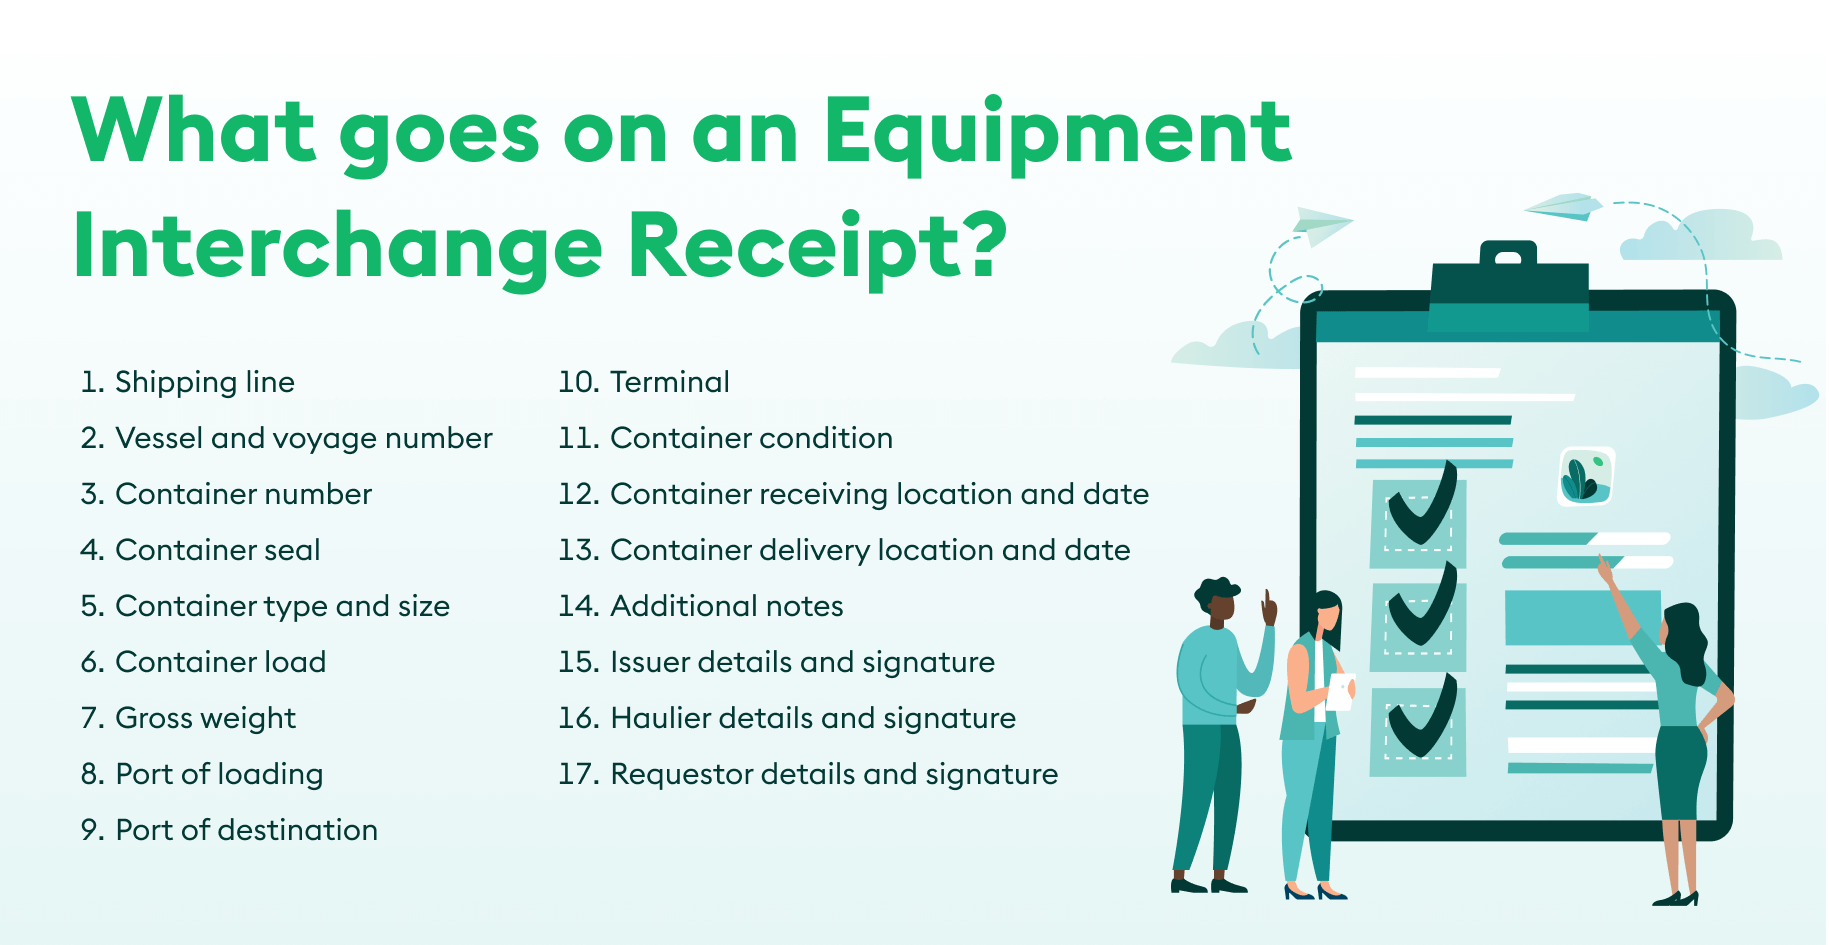 what goes on an Equipment interchange receipt?